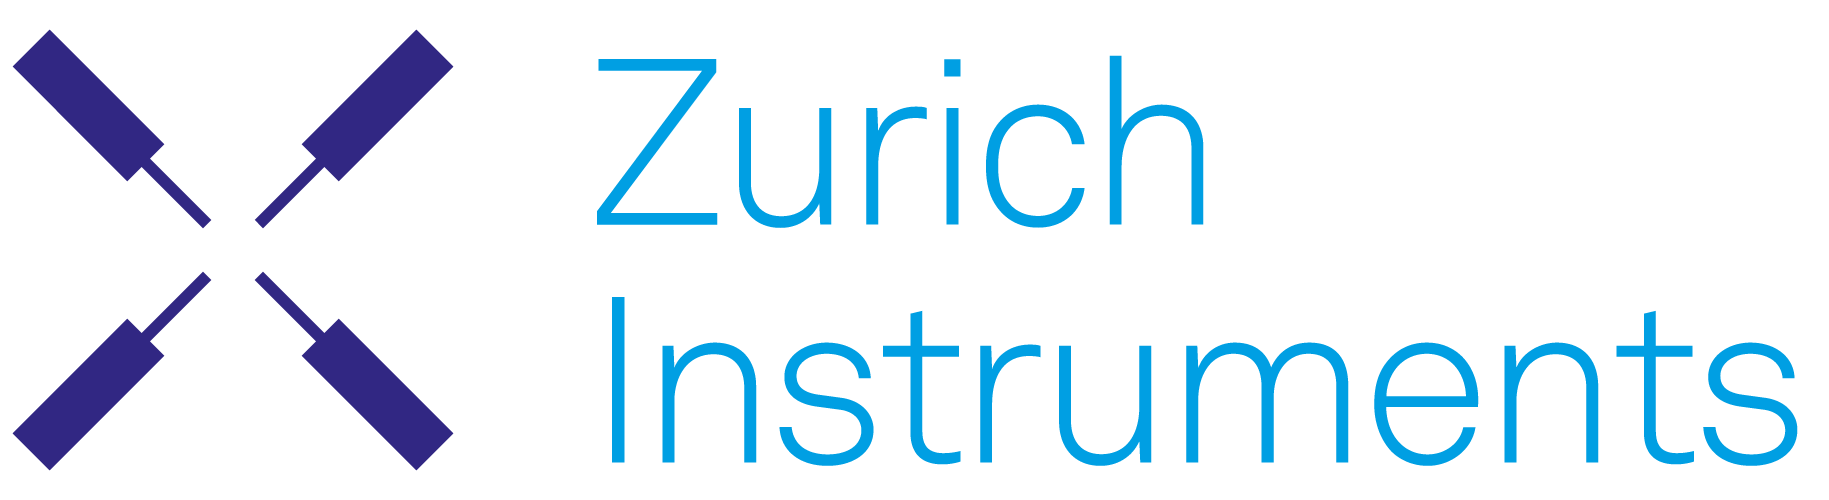 Instrumentos de Zúrich